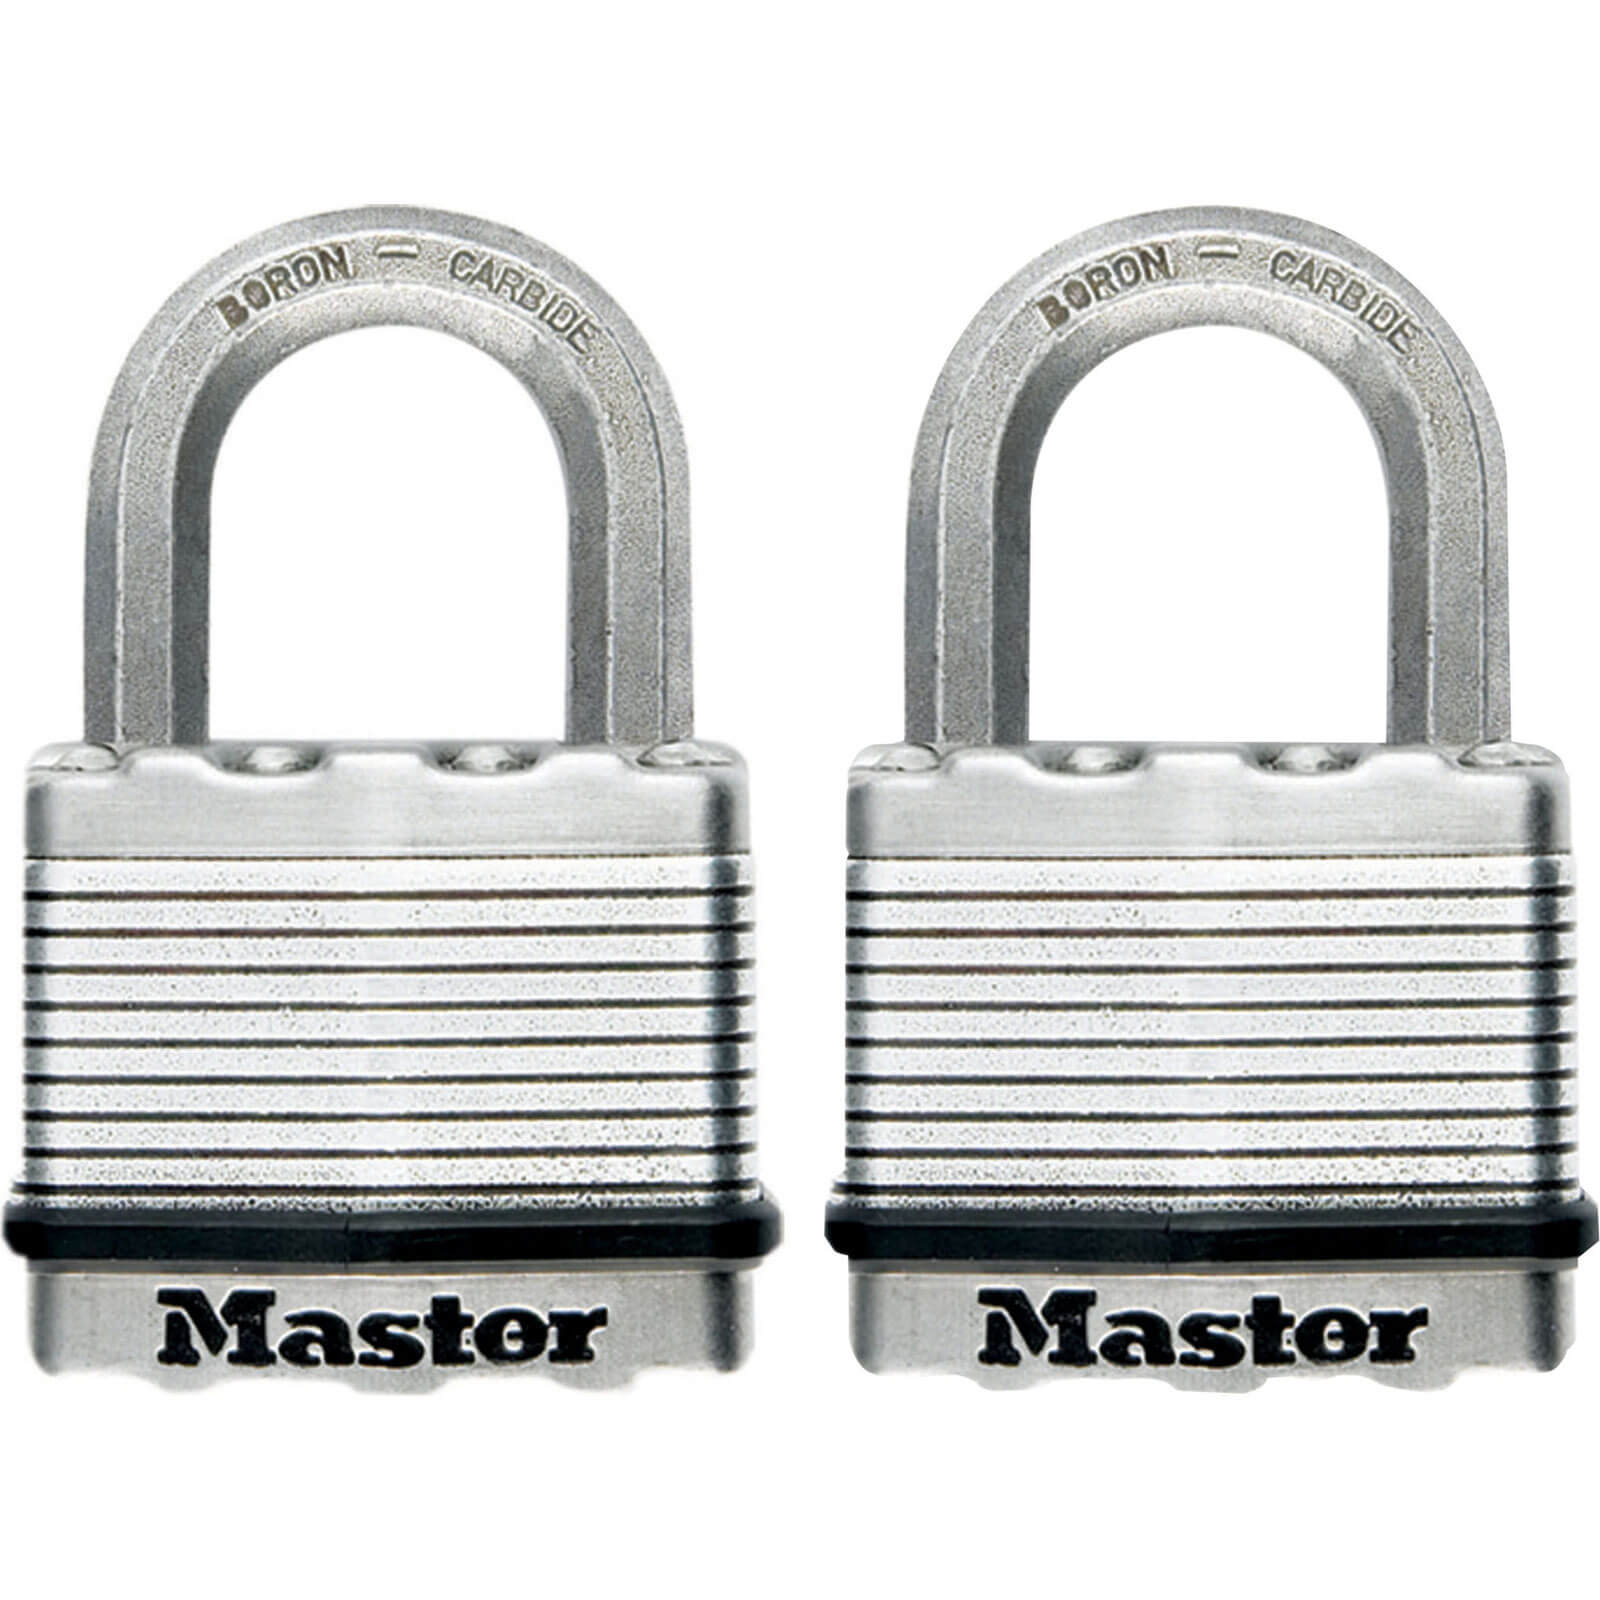 Image of Masterlock Excell Laminated Steel Padlock Pack of 2 Keyed Alike 50mm Standard